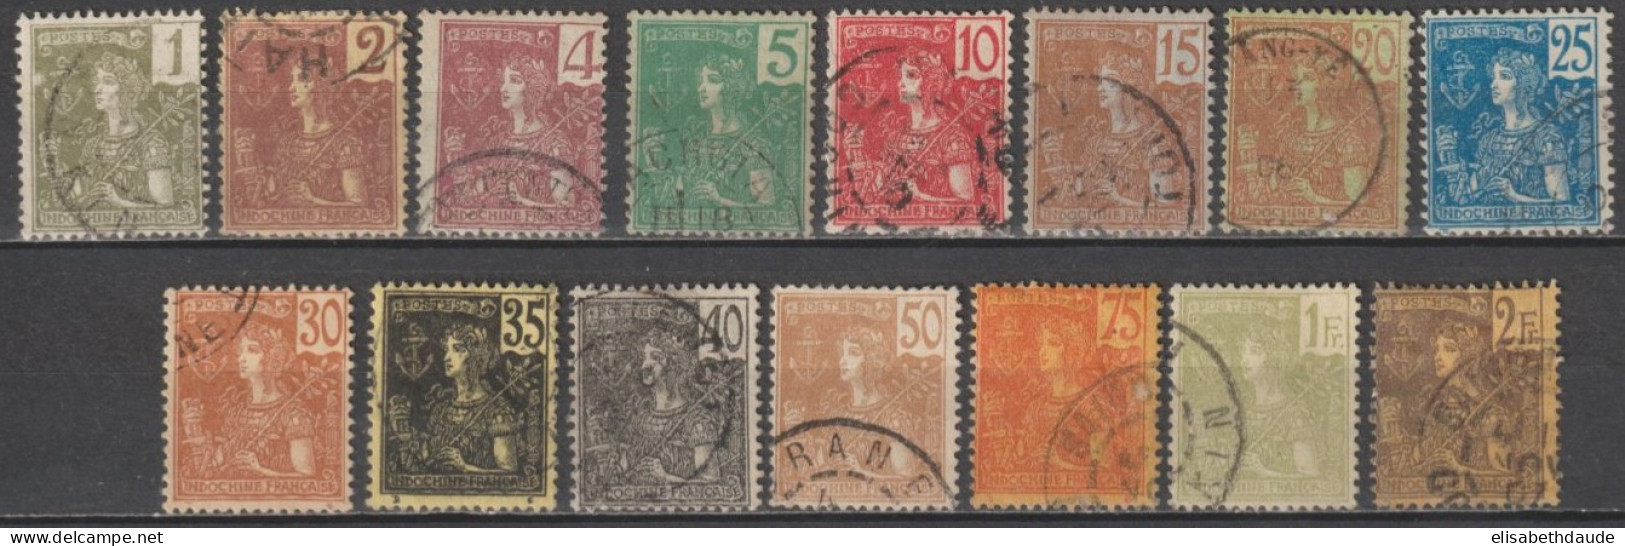 INDOCHINE - 1904 - YVERT N° 24/38 OBLITERES - COTE = 125 EUR - Used Stamps